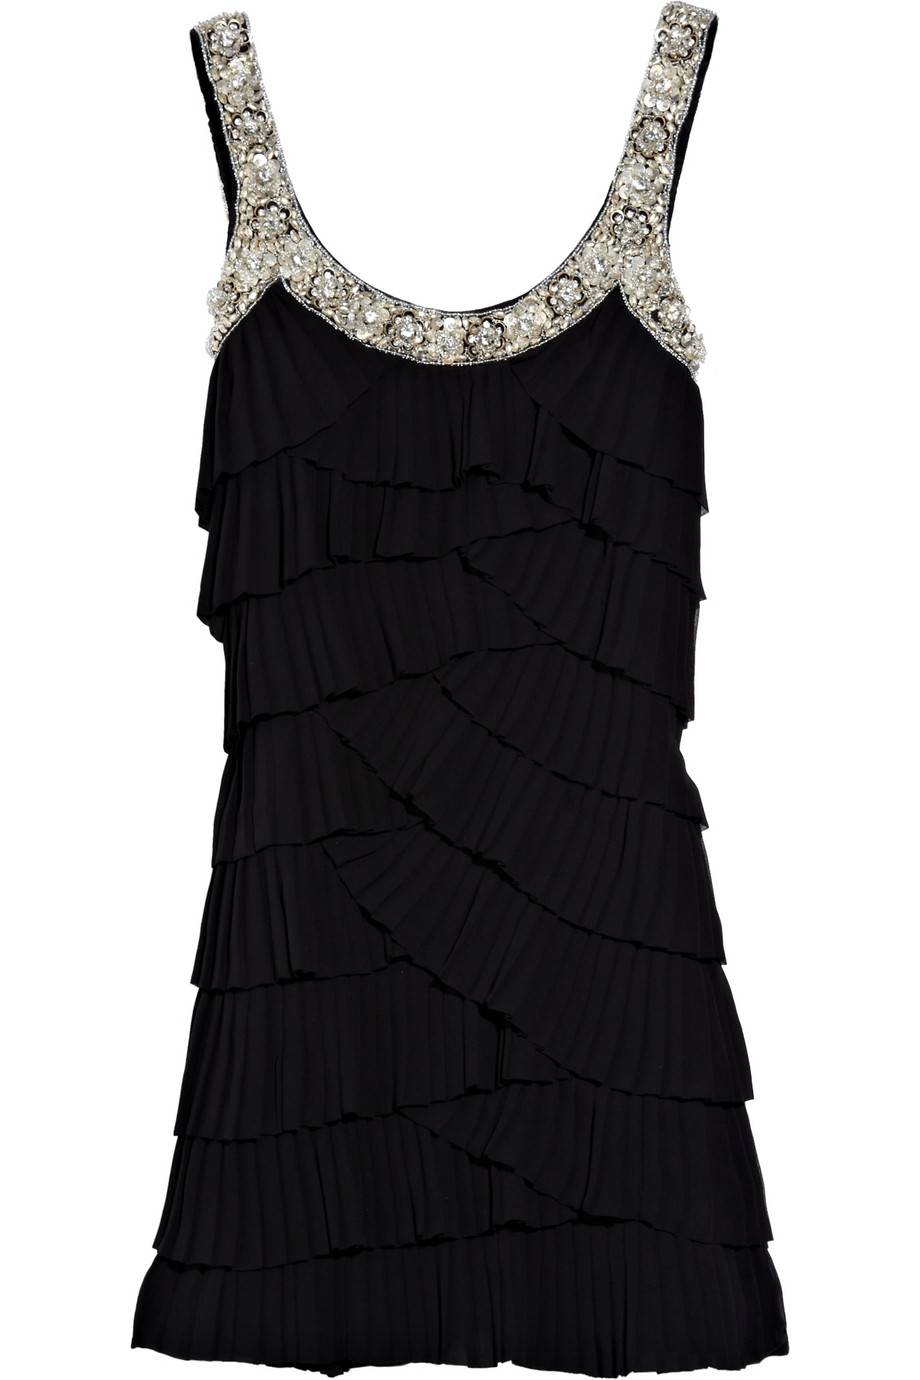 Lyst - Rachel Gilbert Keisha Embellished Crepe Dress in Black